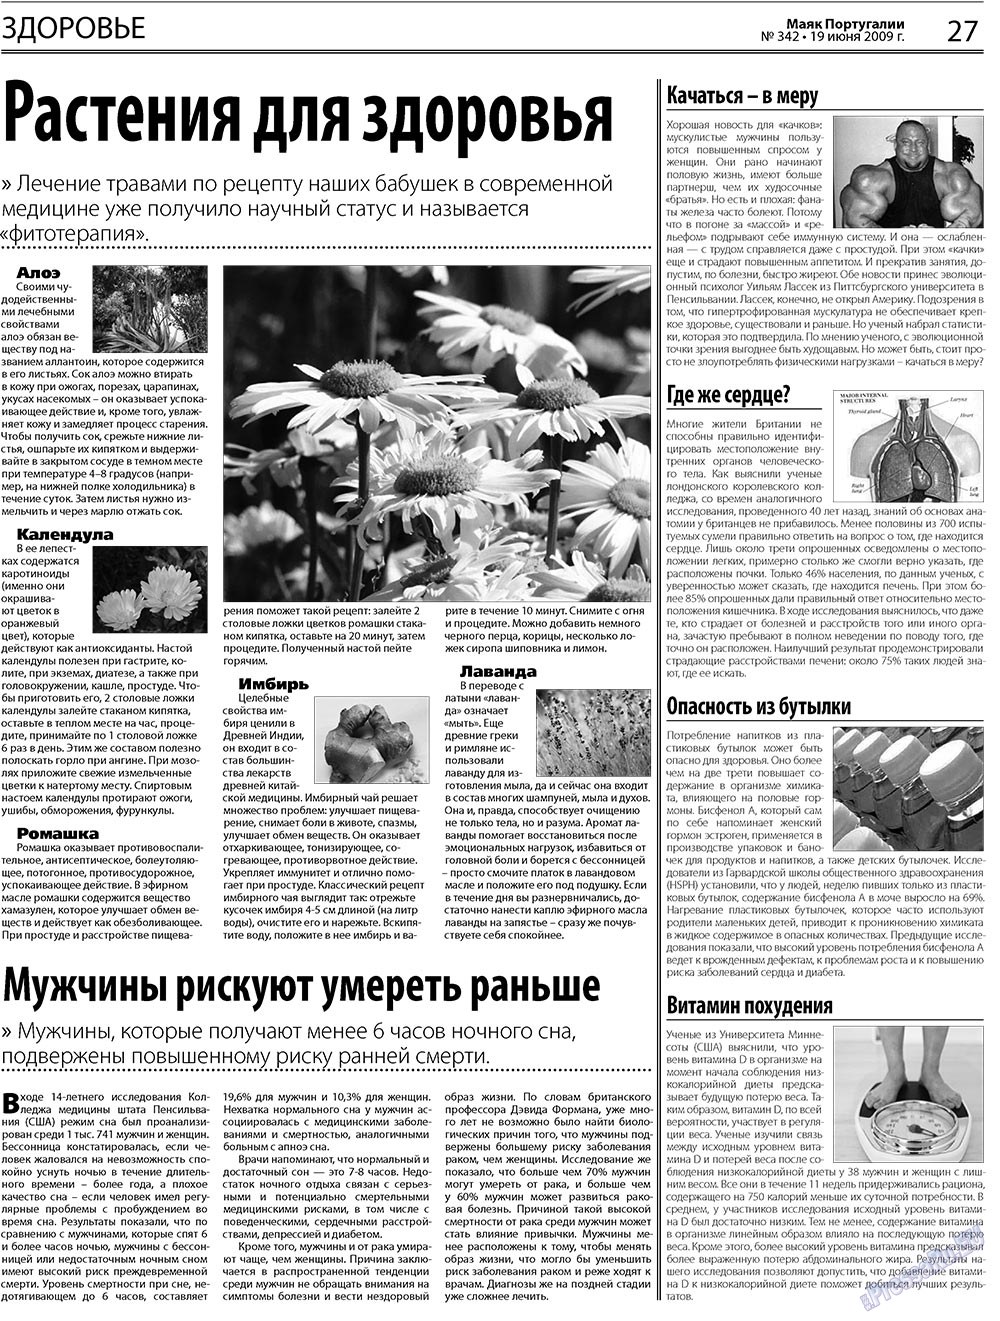 Маяк Португалии, газета. 2009 №24 стр.27